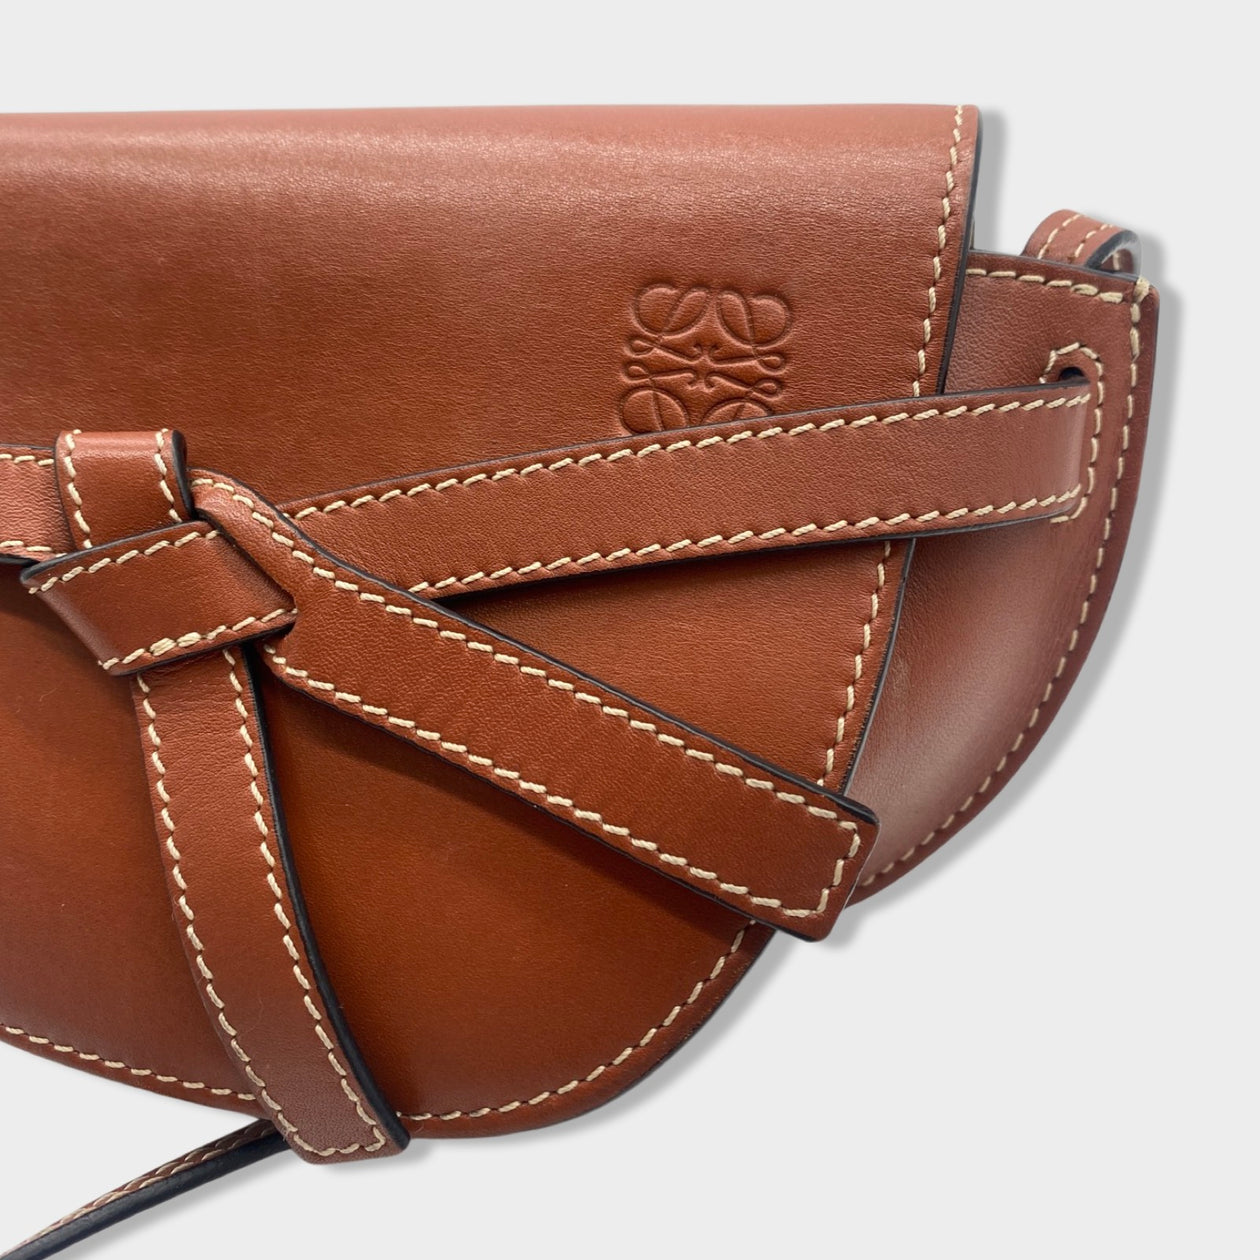 Loewe Authenticated Gate Leather Handbag